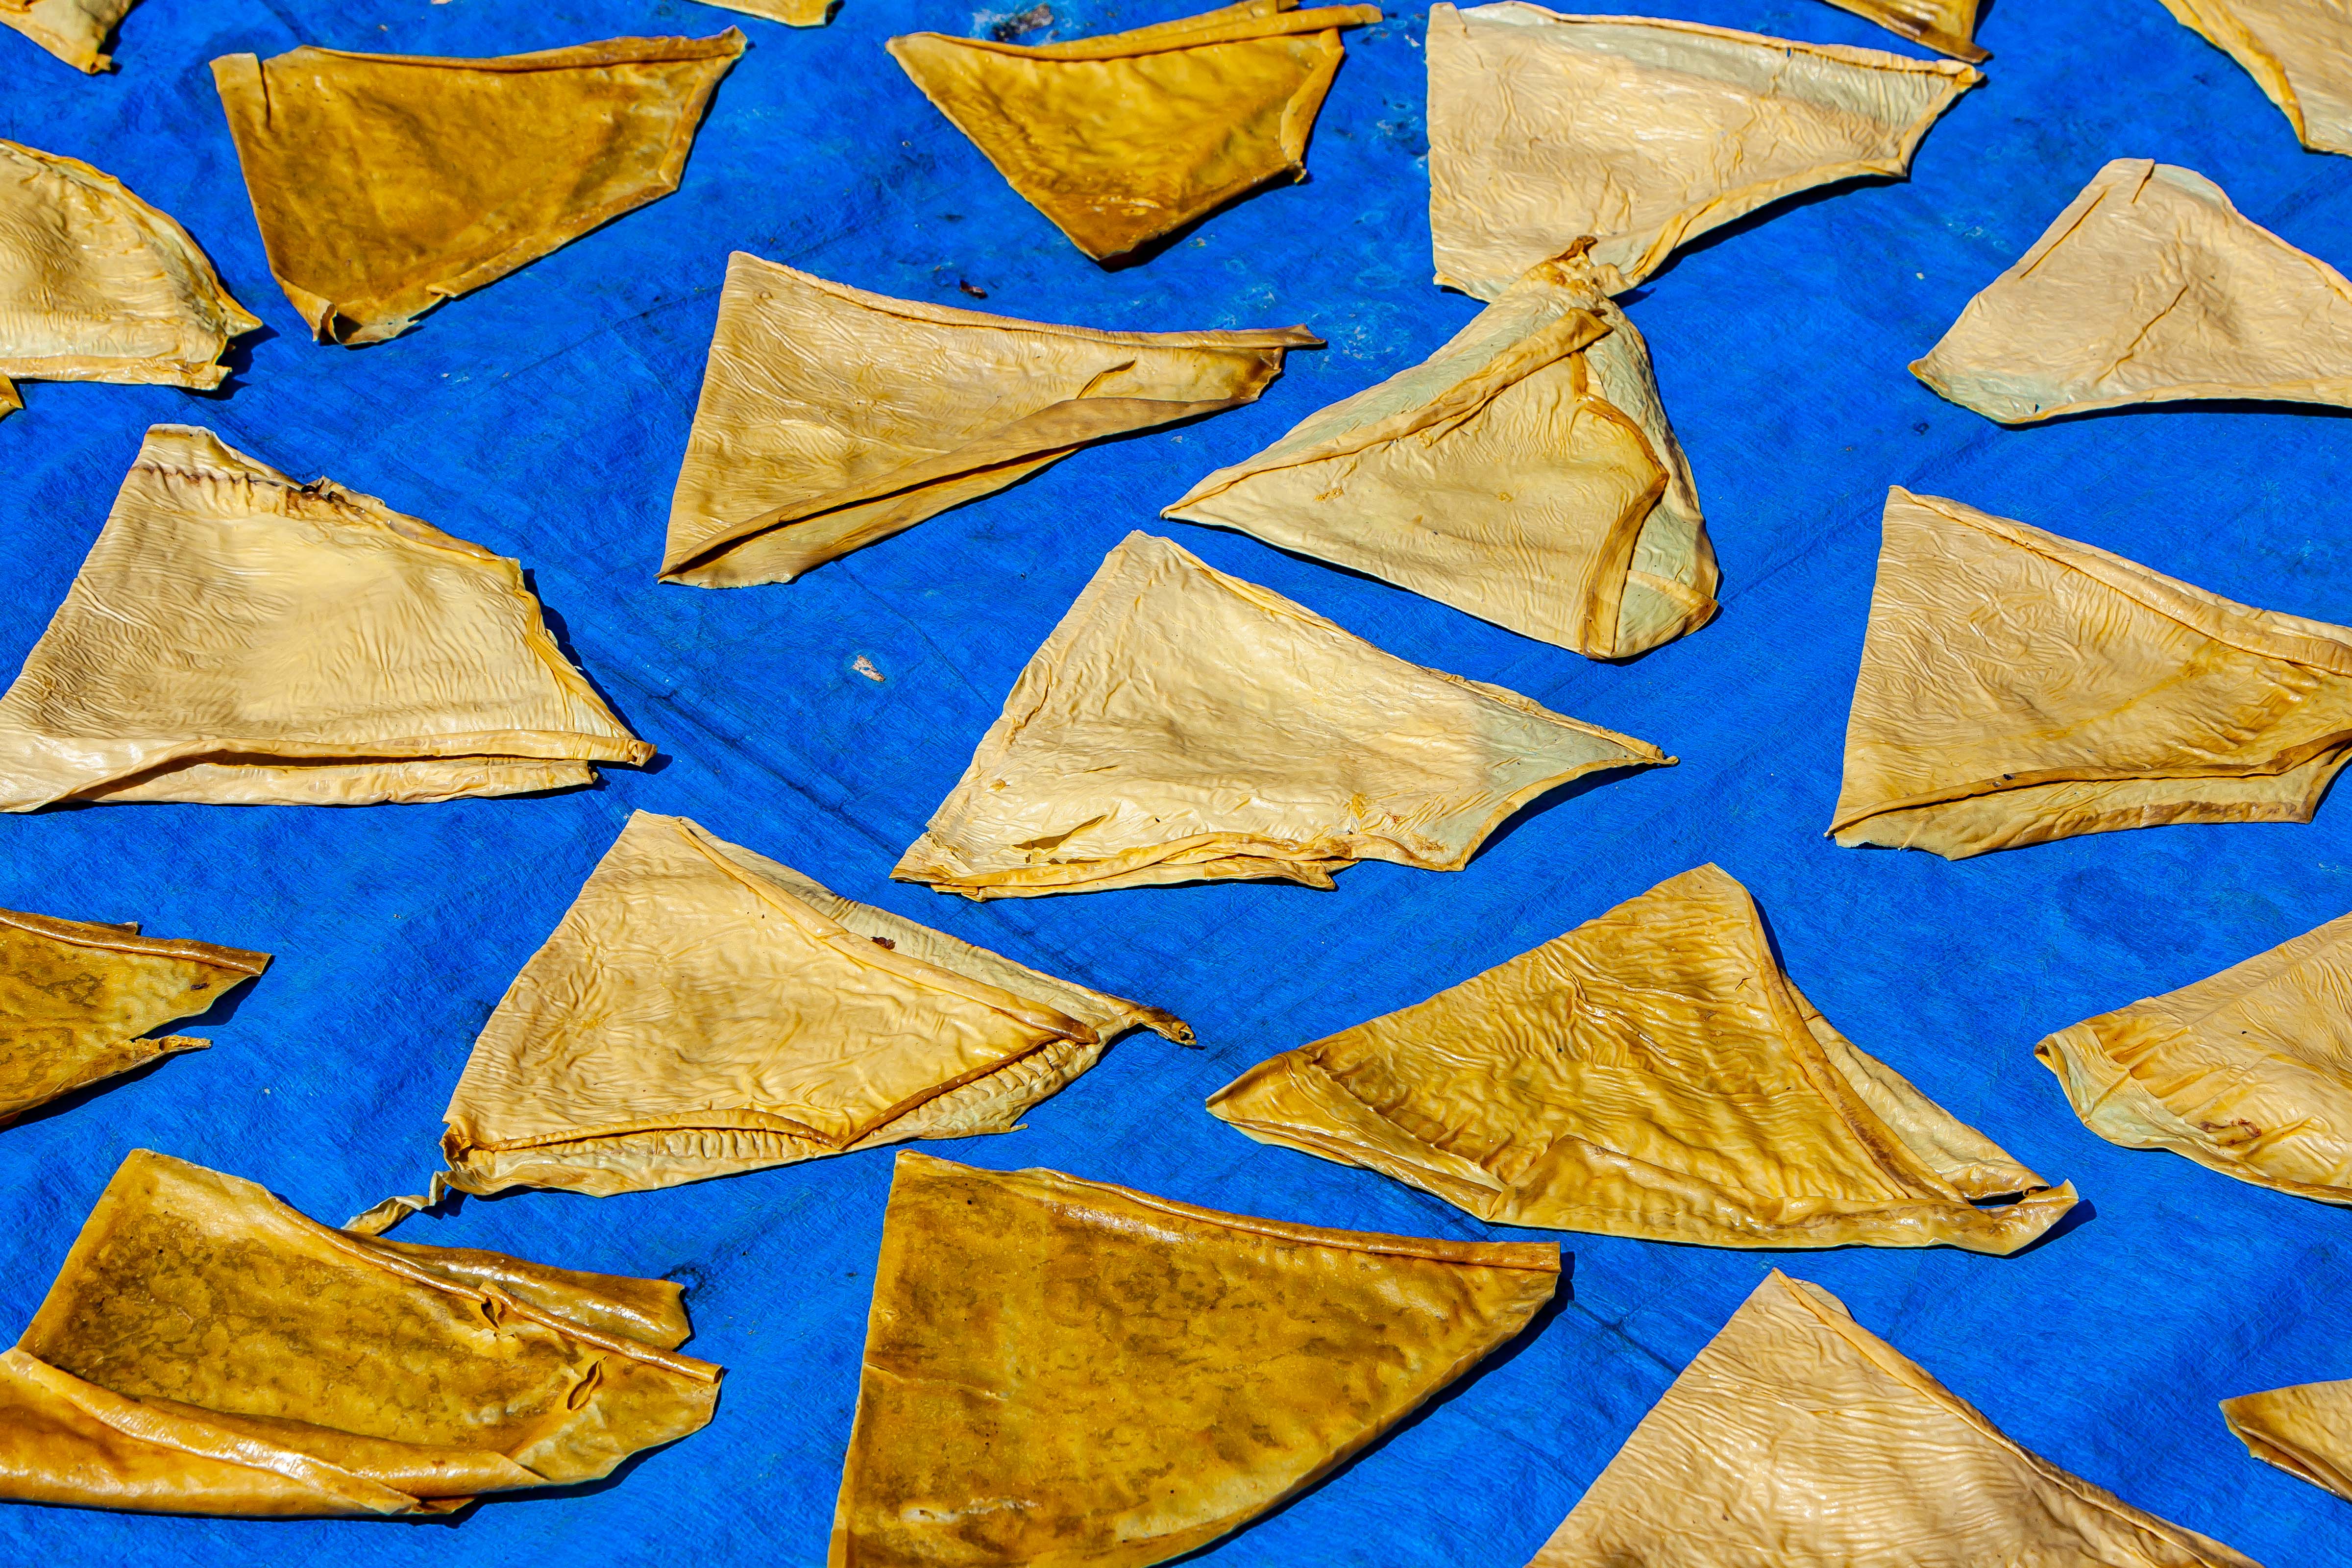 Vietnam, Quang Ngai Prov, Drying Food Triangles, 2010, IMG 2564